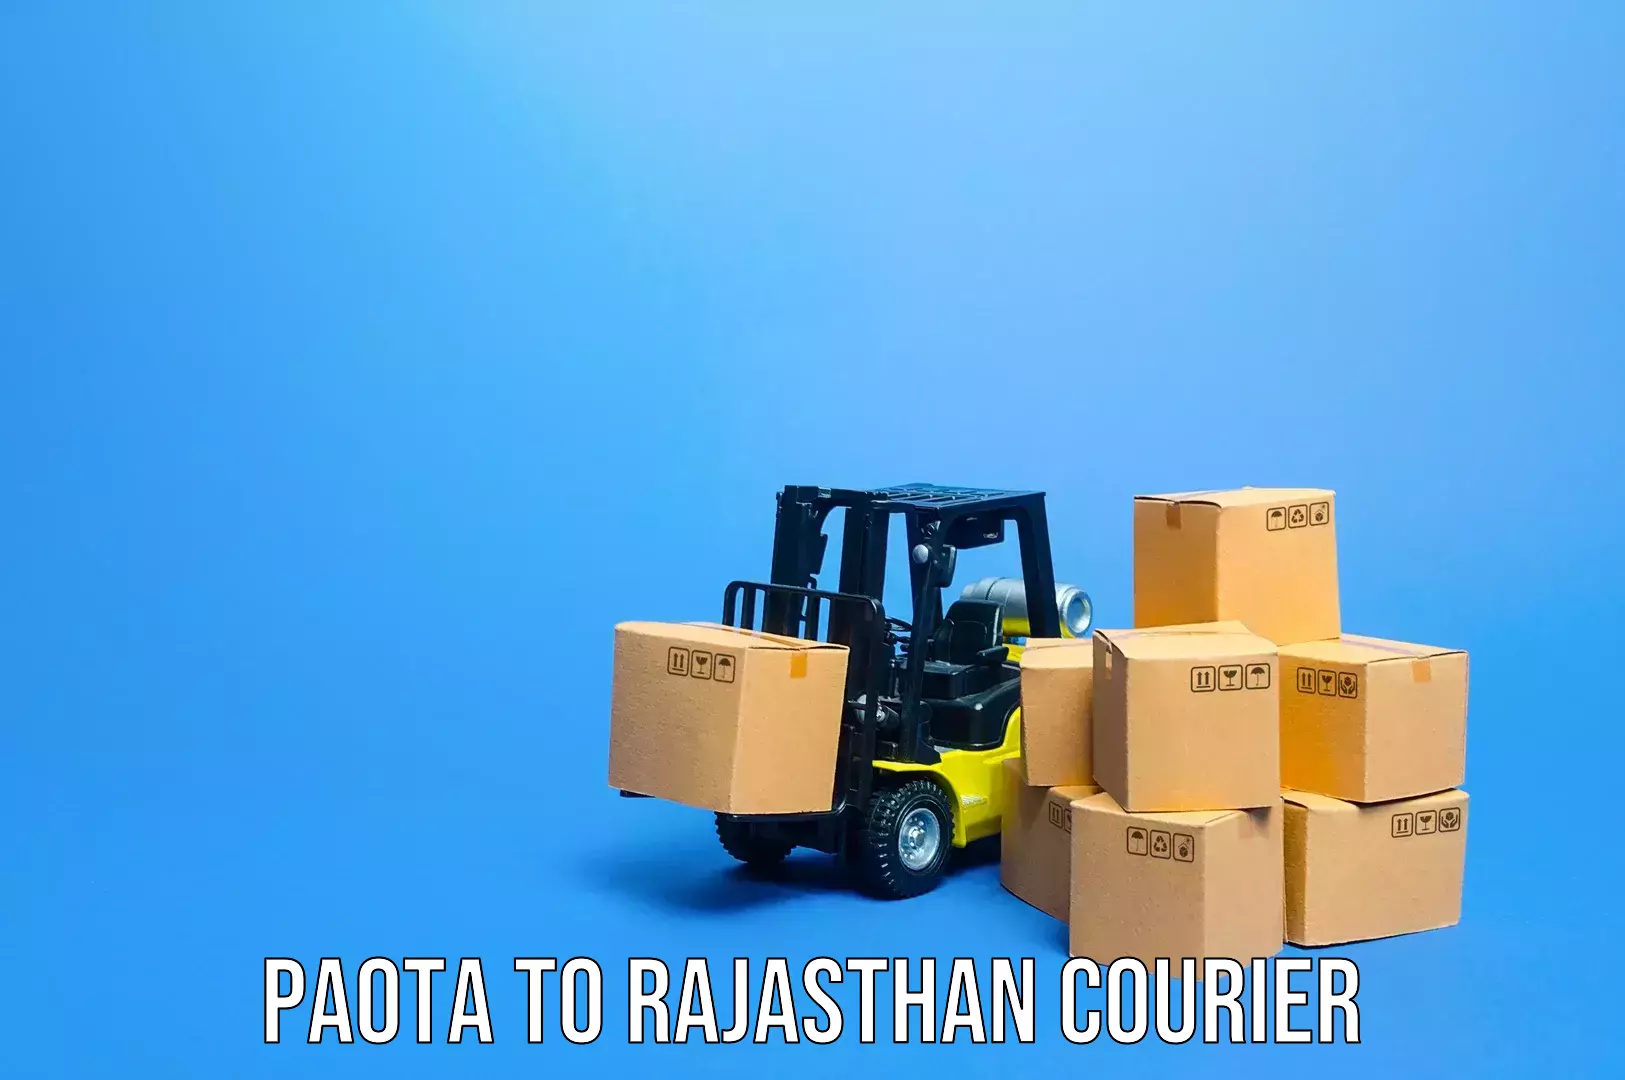 Luggage shipment tracking Paota to Khandela Sikar